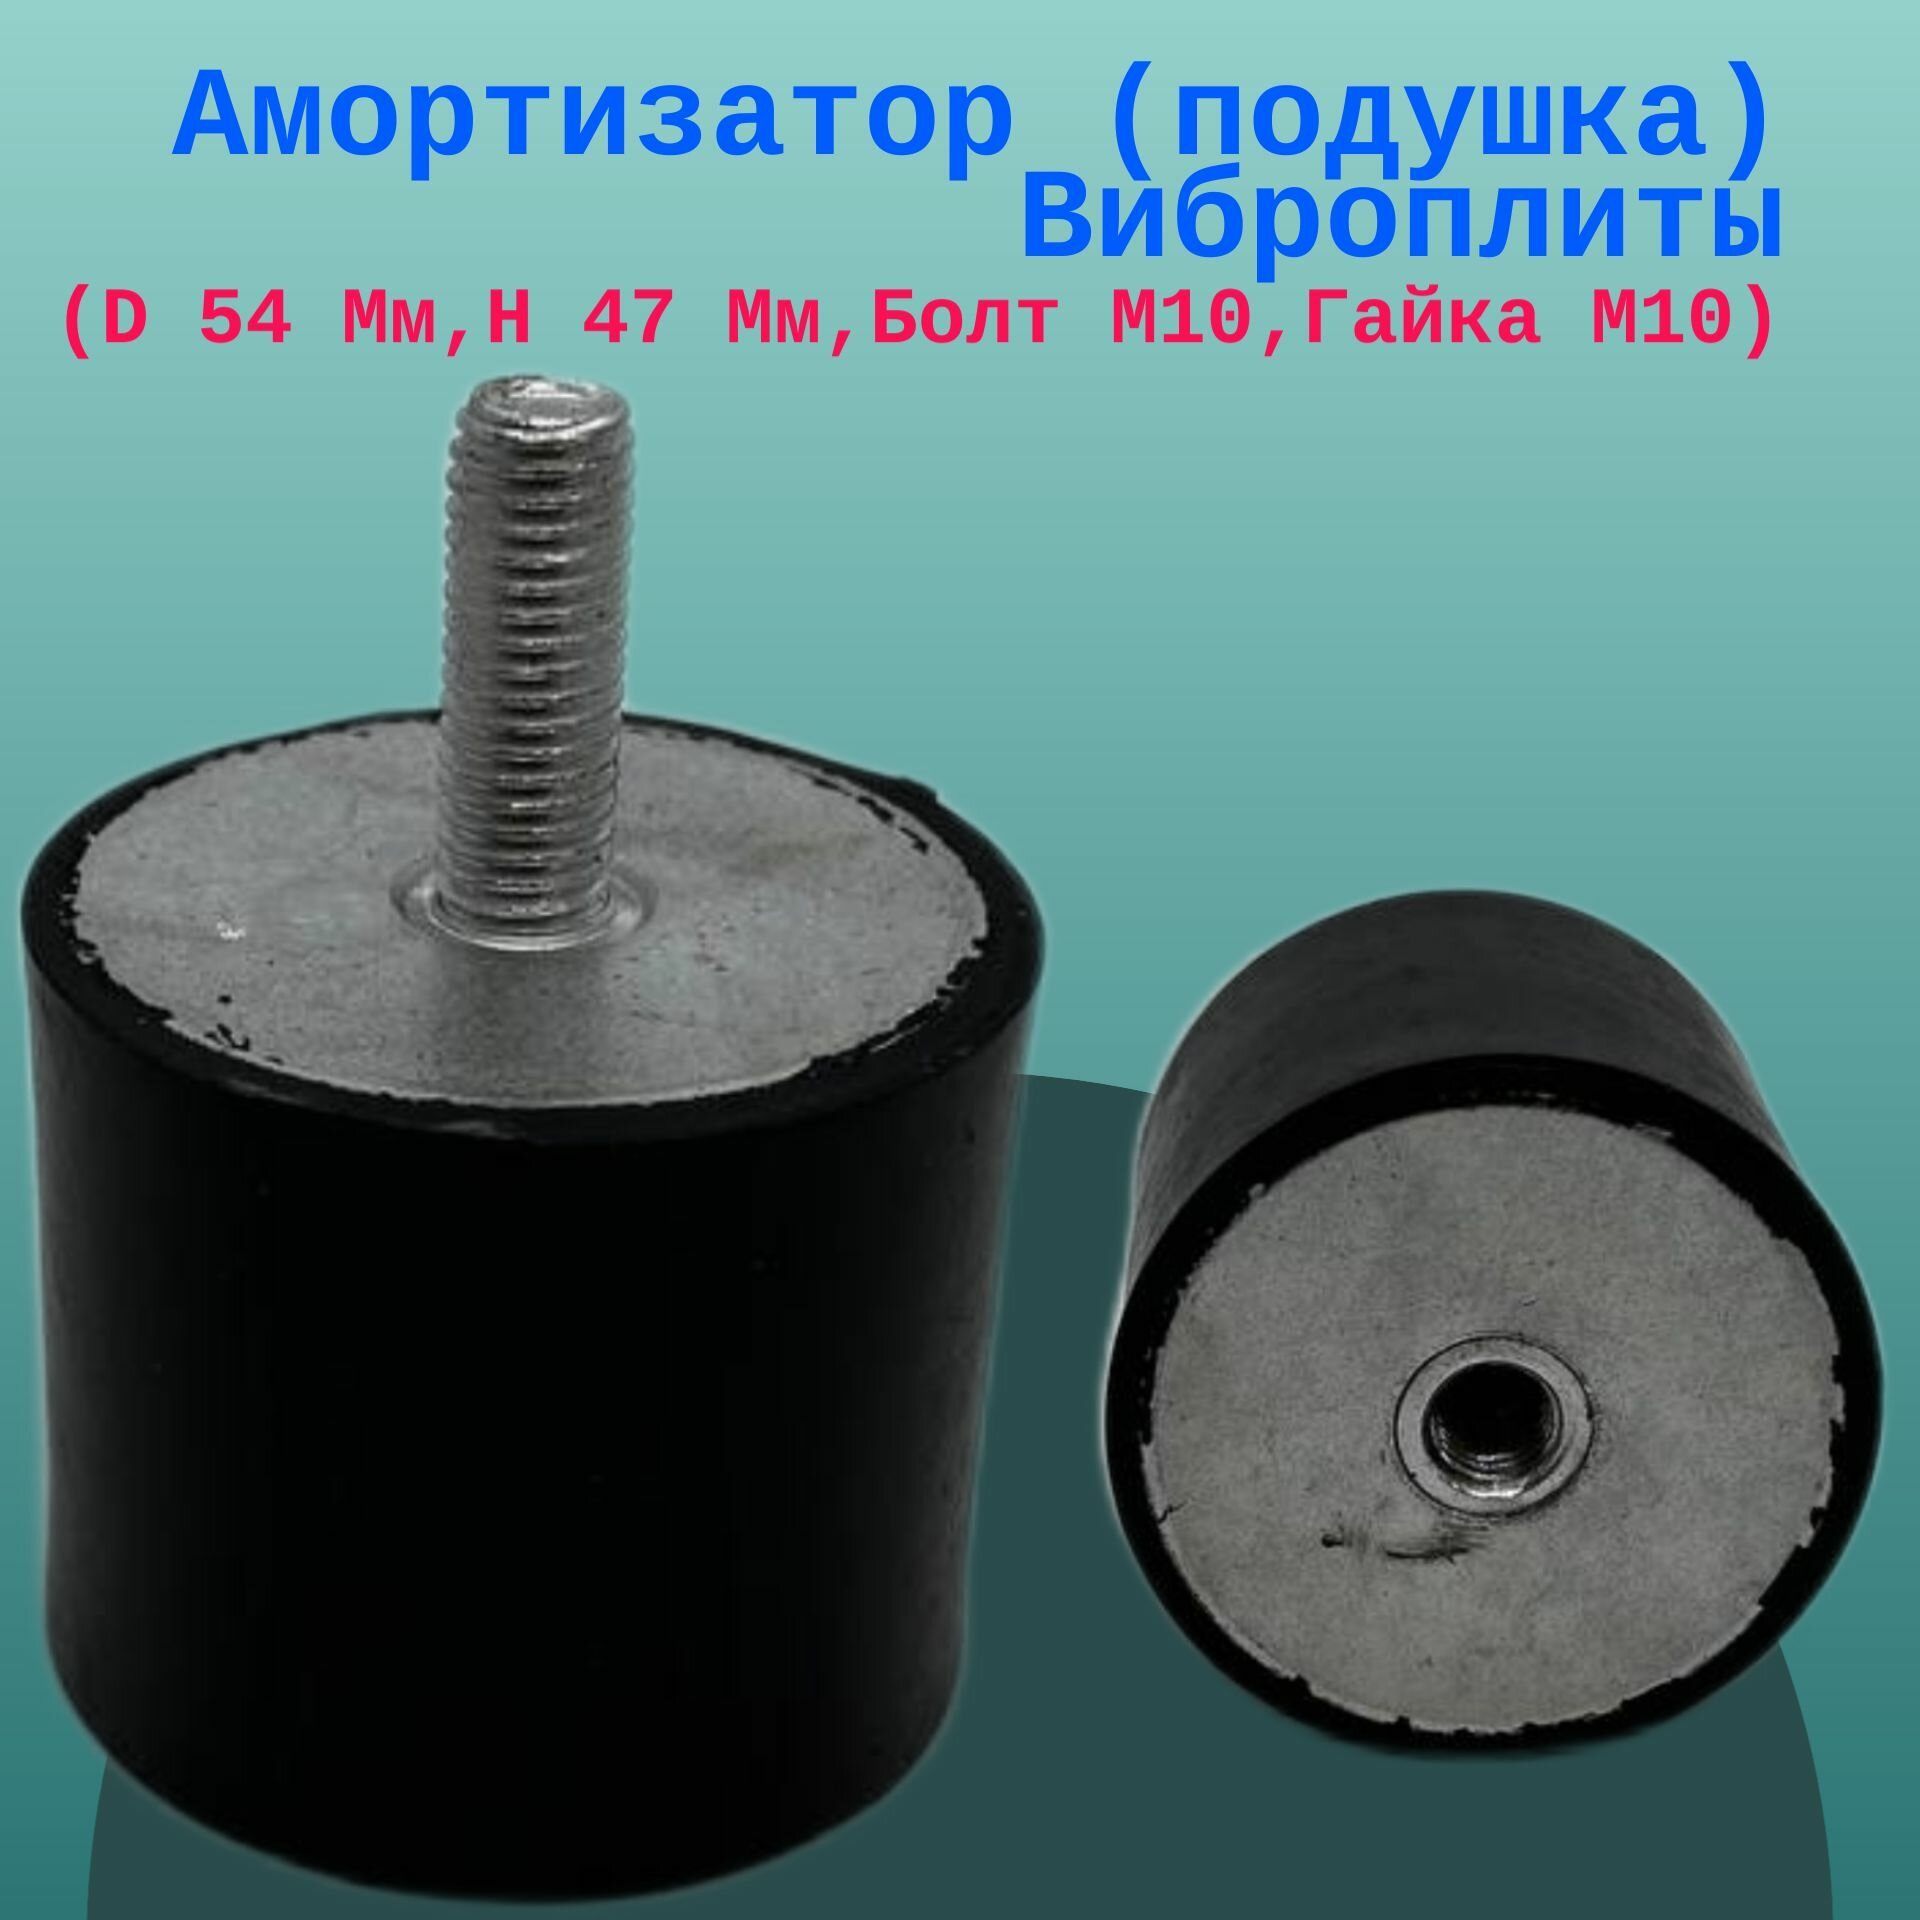 Амортизатор (подушка) Виброплиты (D 54 Мм H 47 Мм Болт М10 Гайка М10)